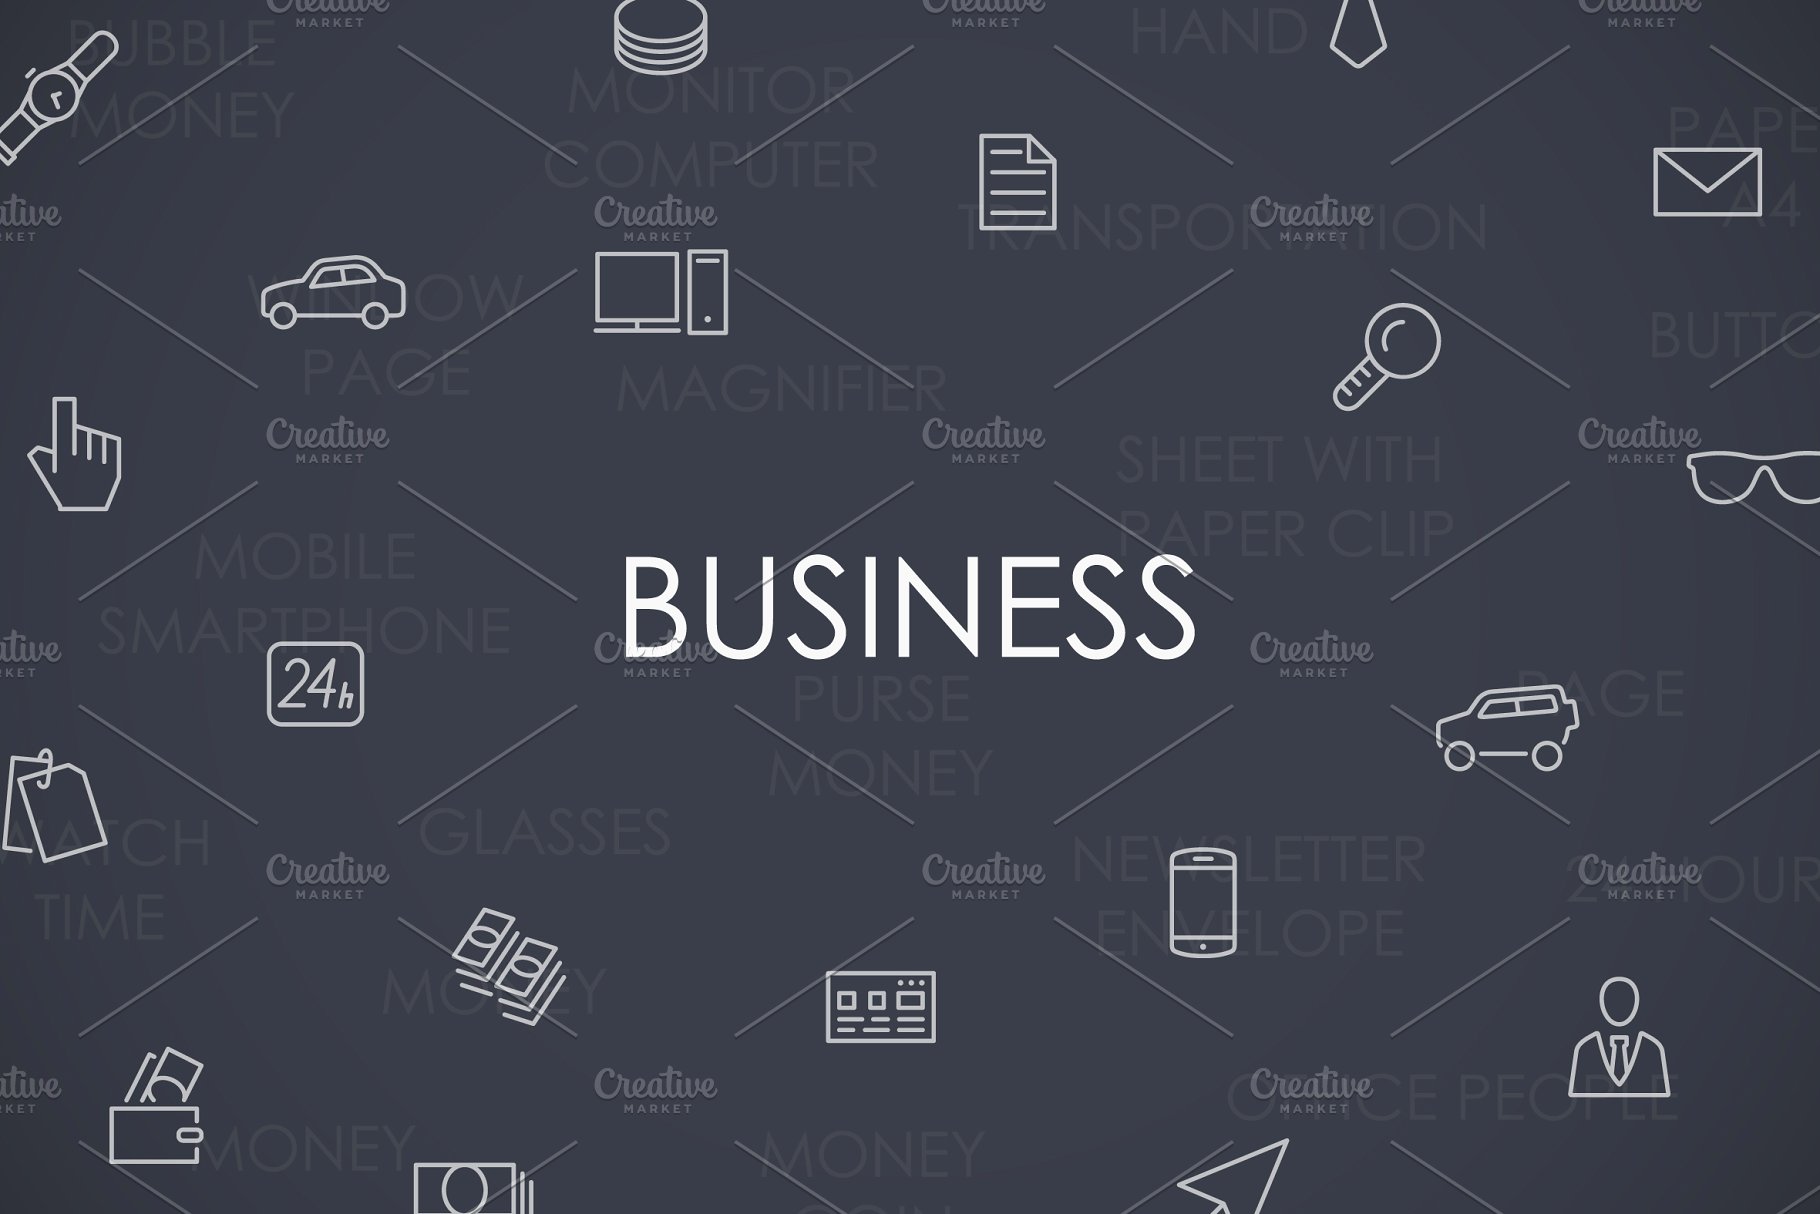 商业时间线图标素材 Business thinline ic